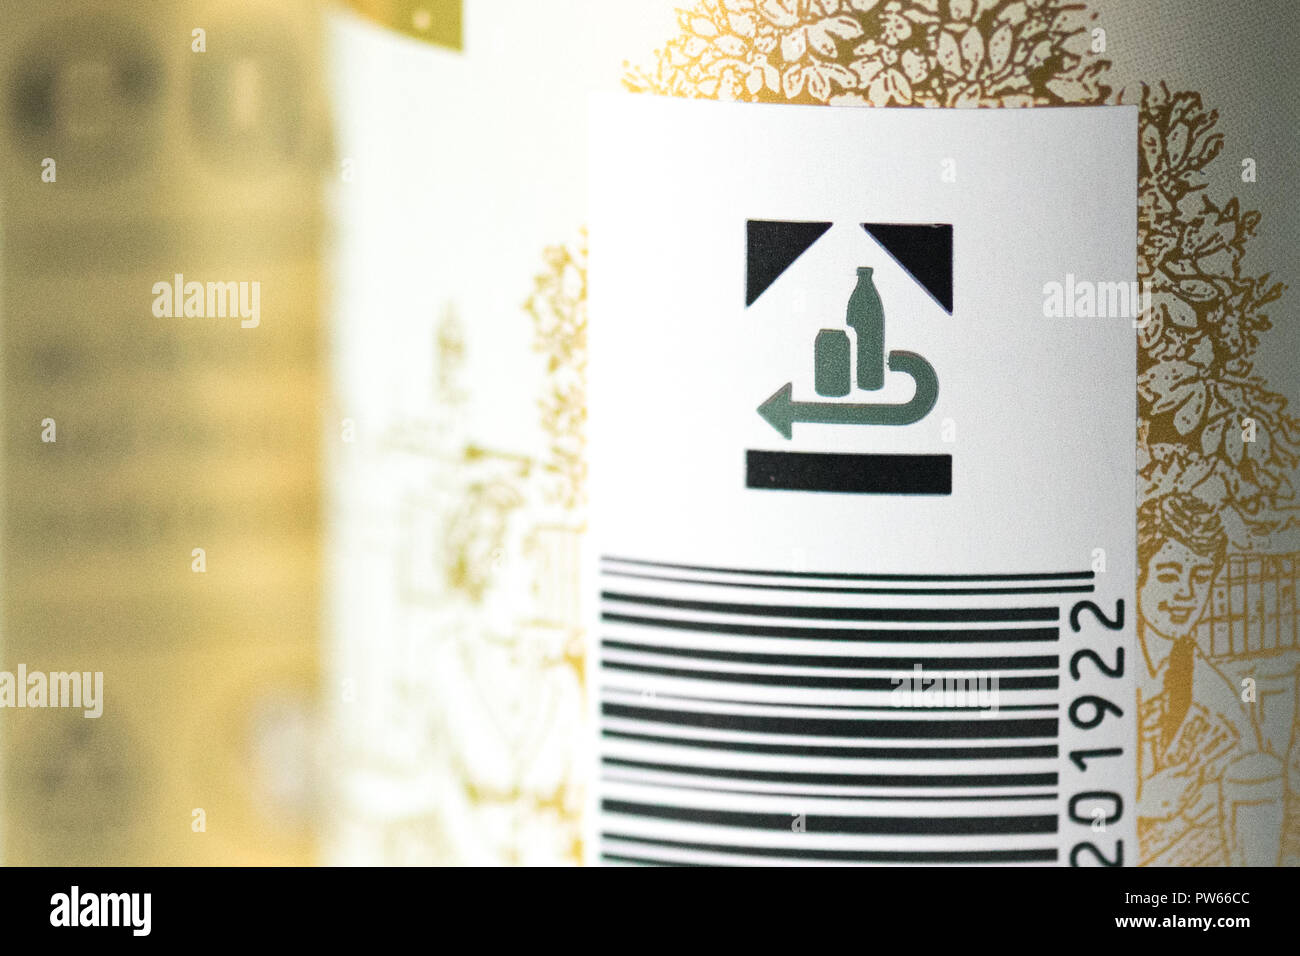 https://c8.alamy.com/comp/PW66CC/pfand-logo-on-german-beer-cans-PW66CC.jpg